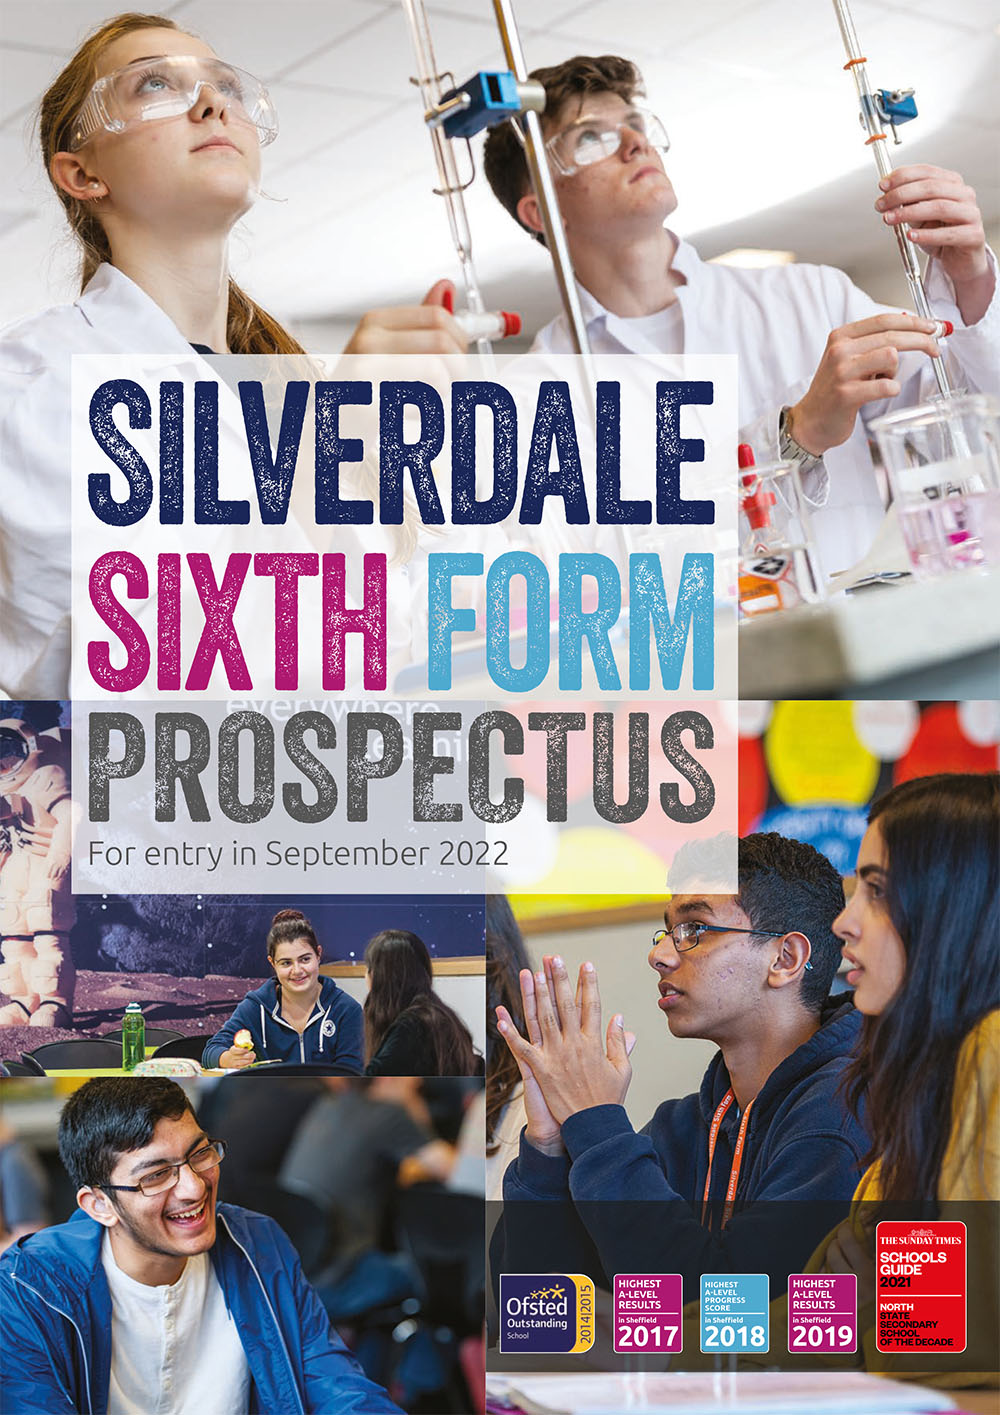 Silverdale Sixth Form Prospectus image